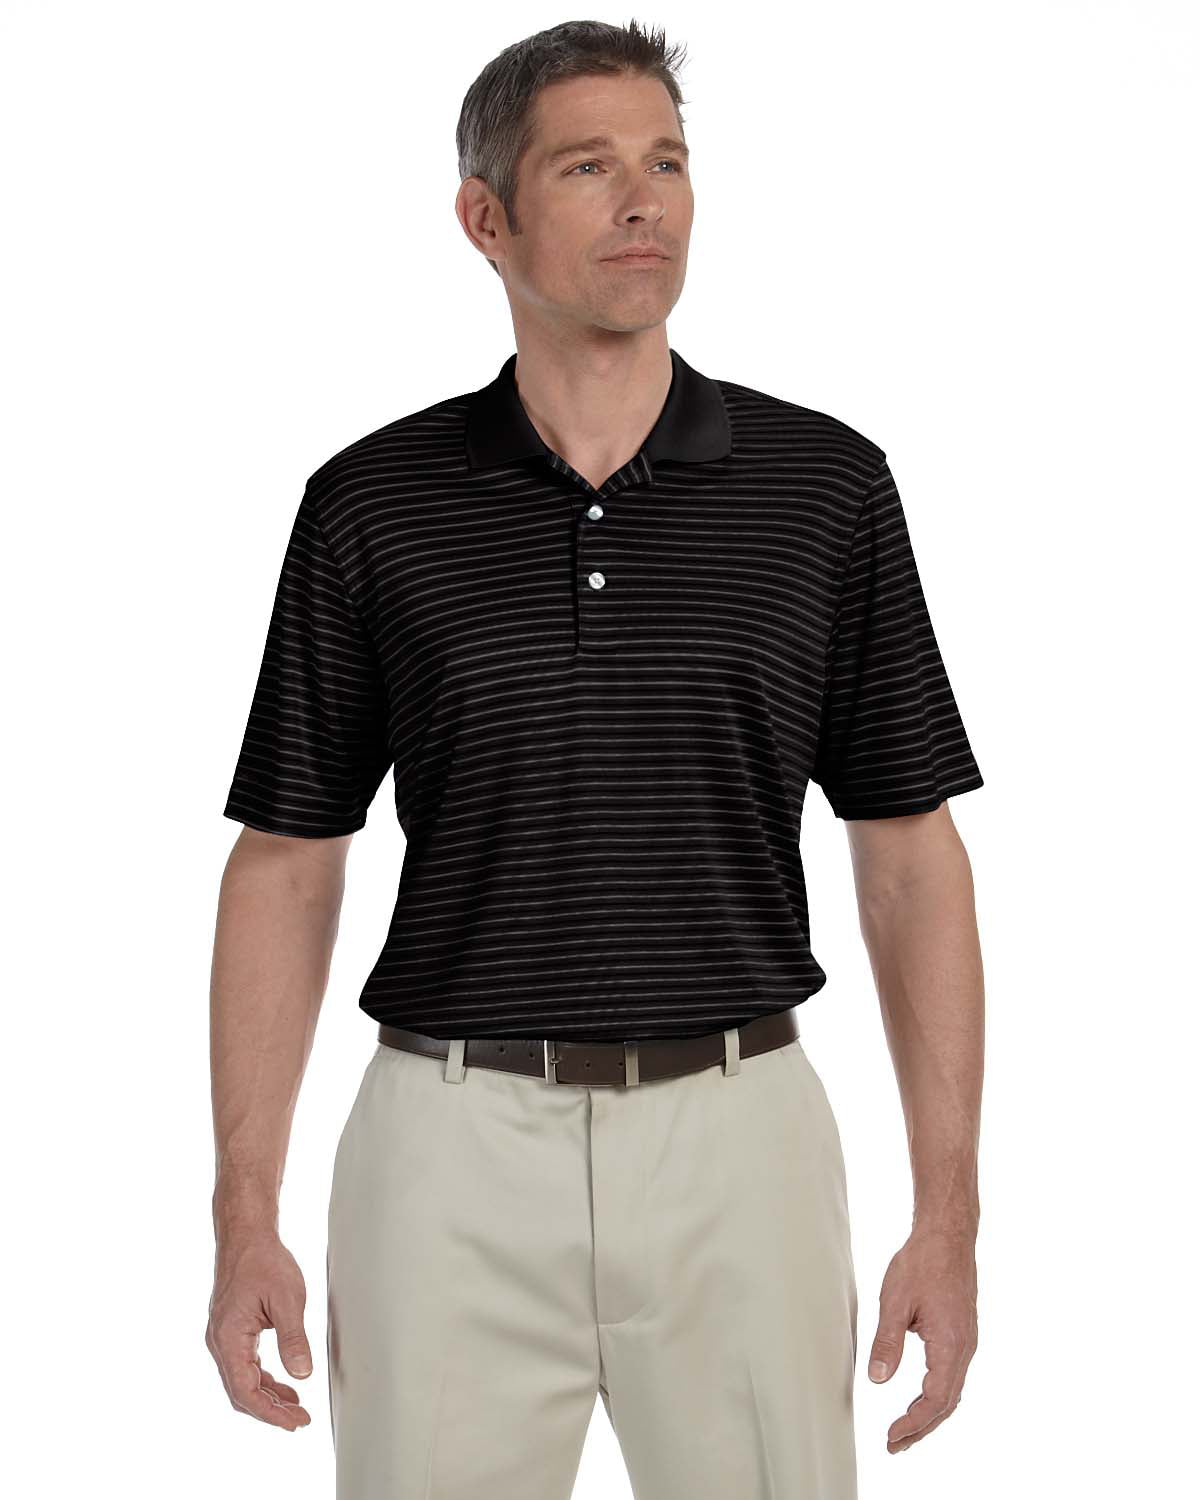 Ashworth Performance Interlock Stripe Polo Shirt Men's 3046 - Walmart.com